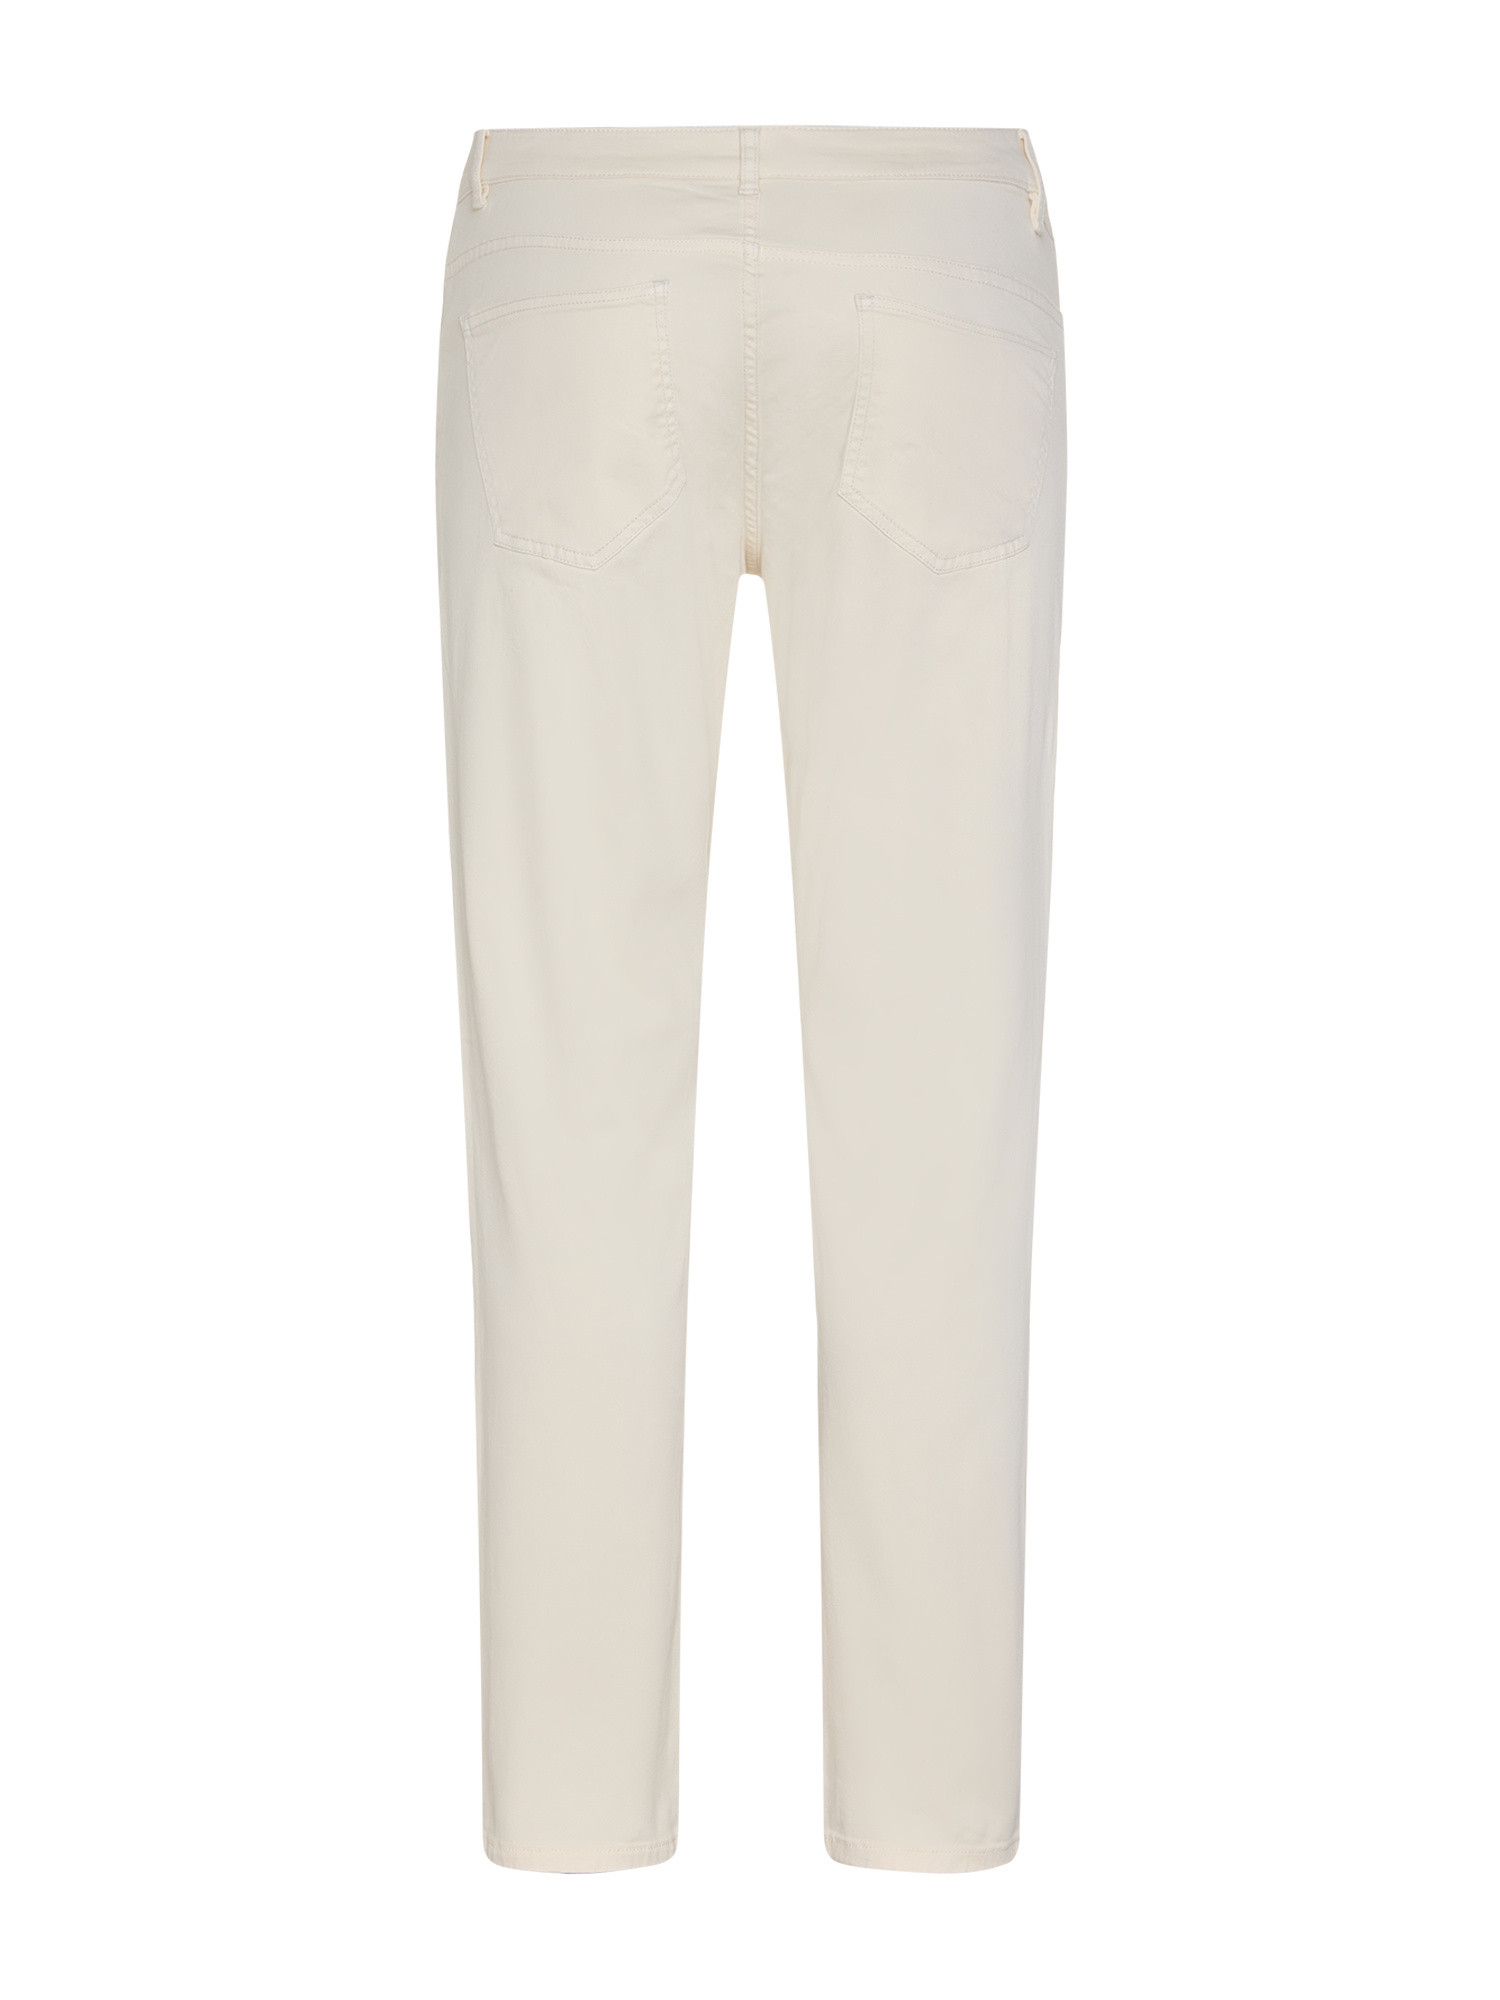 JCT - Pantaloni slim fit cinque tasche, Bianco panna, large image number 1